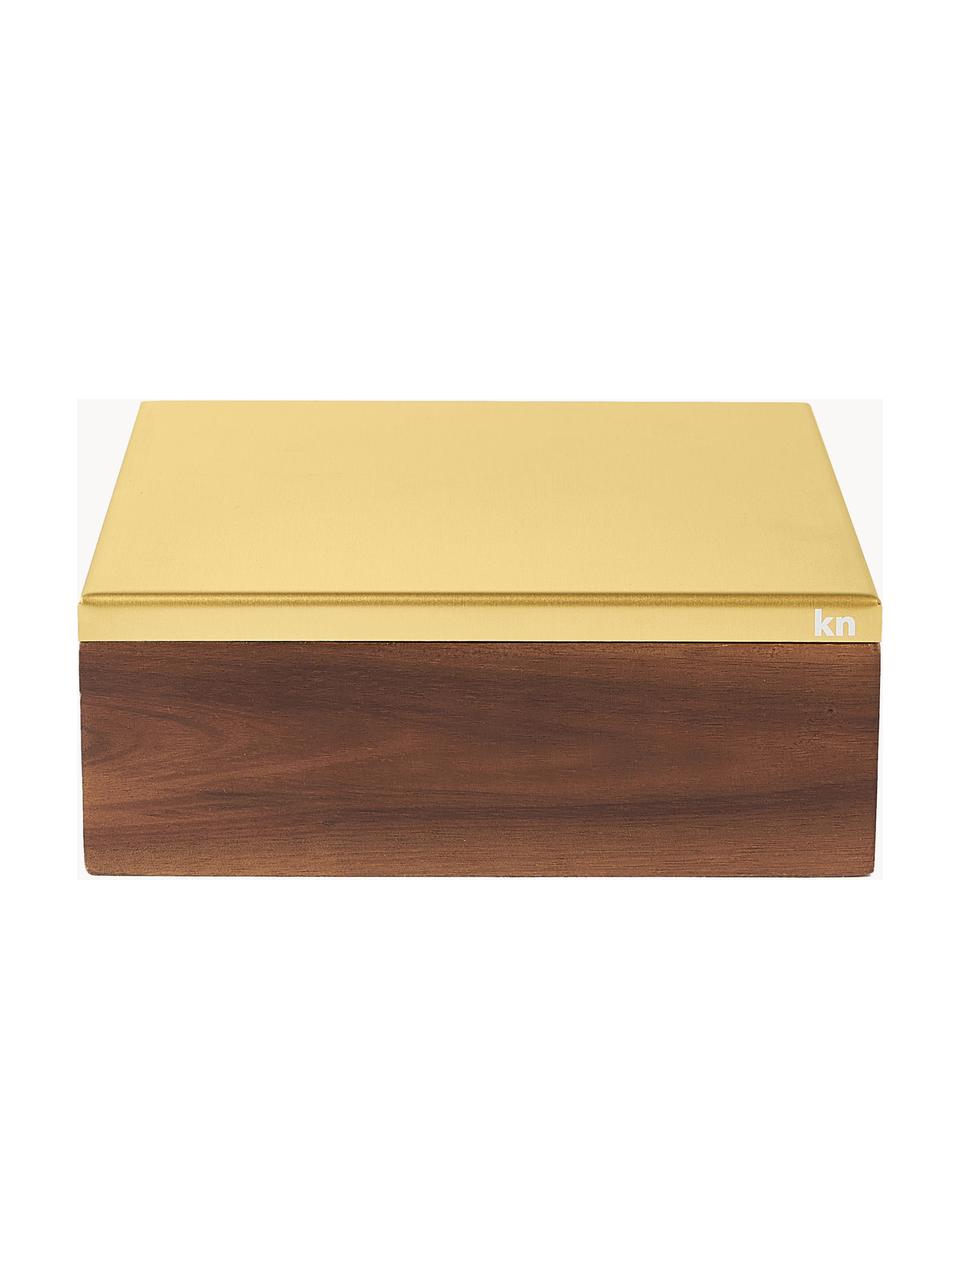 Gewürzaufbewahrung Wood aus Akazienholz, Box: Akazienholz, Becher: Glas, Deckel: Stahl, beschichtet, Akazienholz, Goldfarben, B 16 x T 16 cm